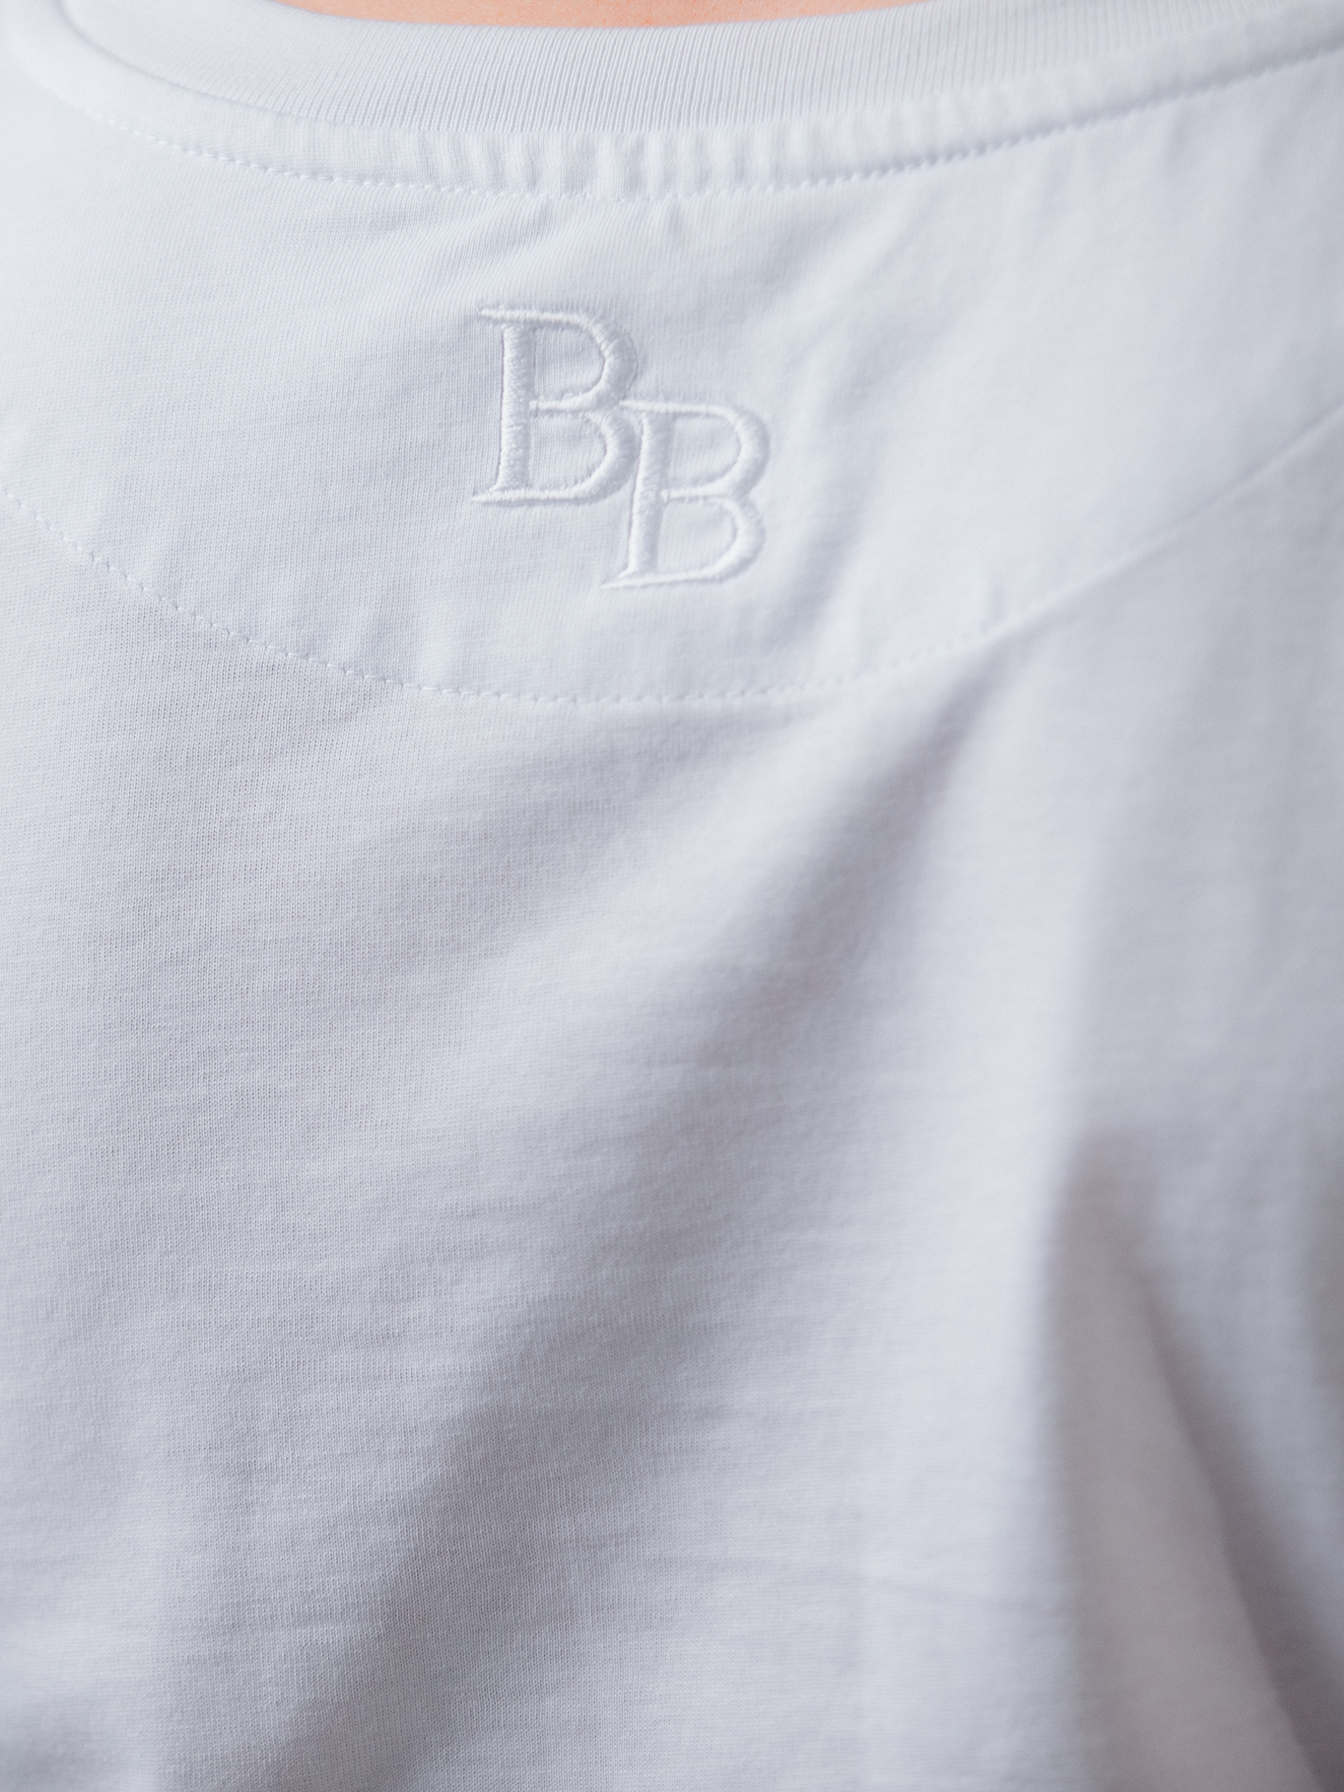 Dartmouth T-Shirt - White